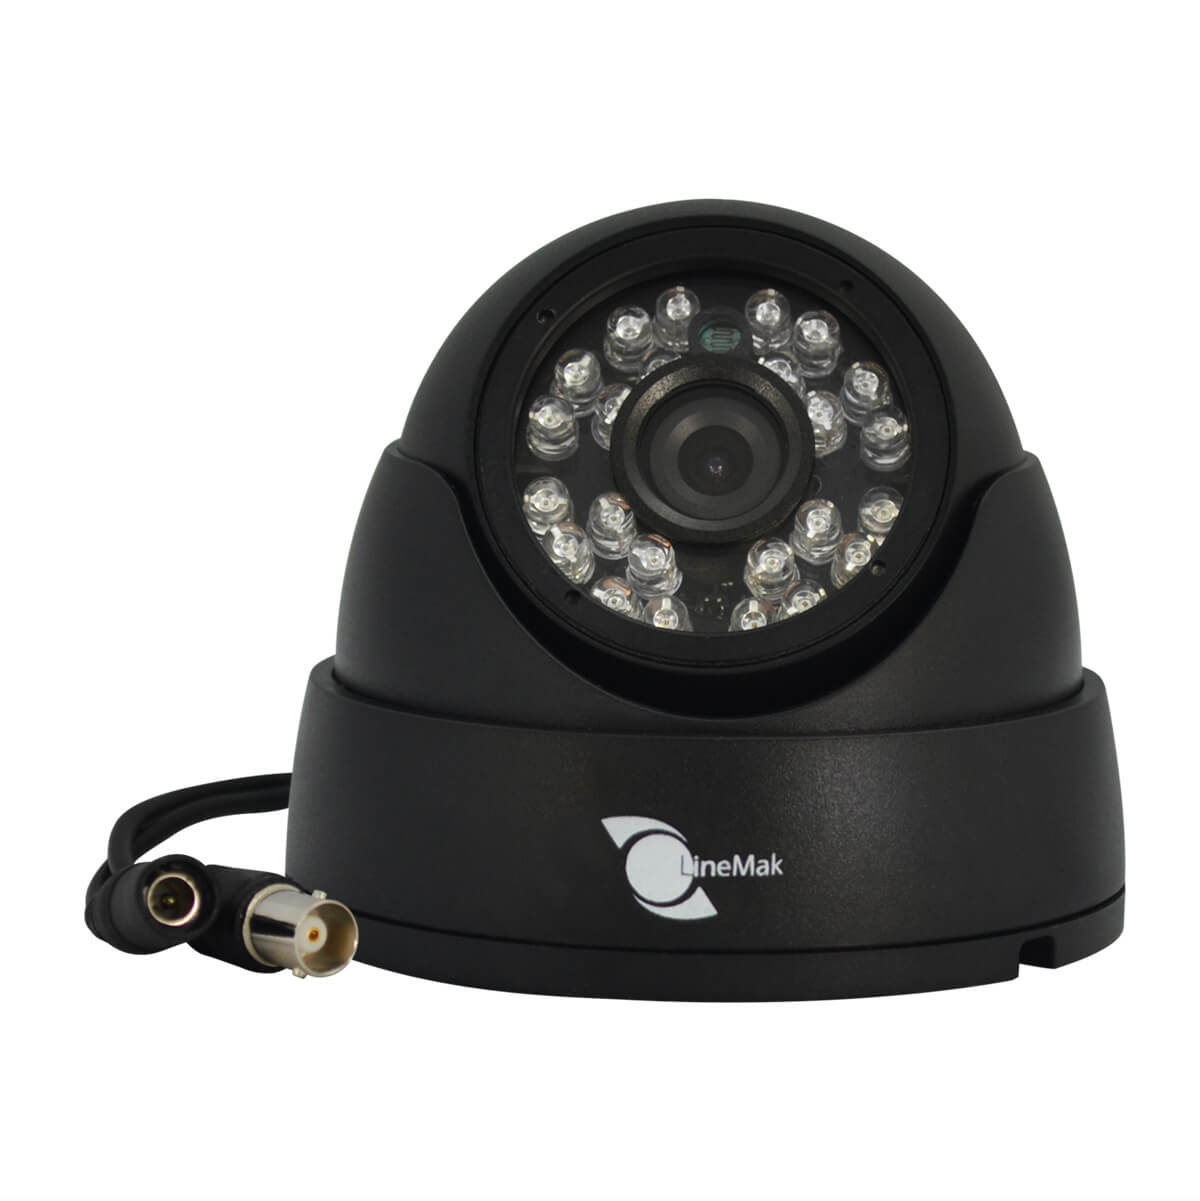 Camara tipo domo, Sensor HD Digital 1/4, 700TVL, 24 LED, 20m IR, IP66